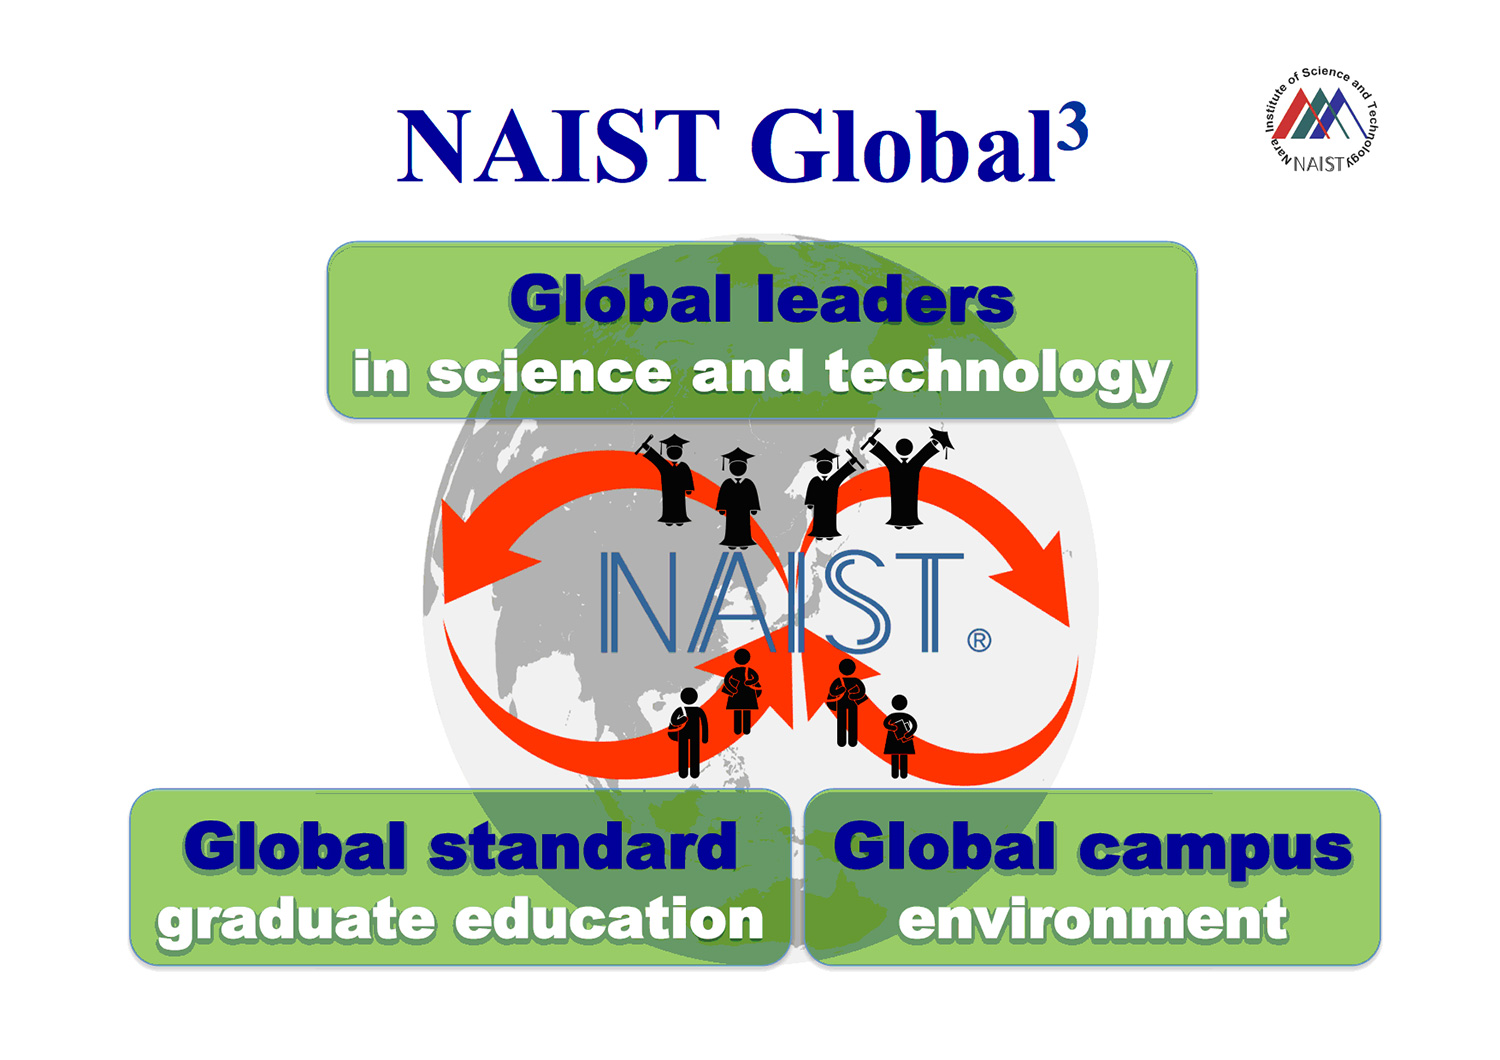 NAIST Global³ Image